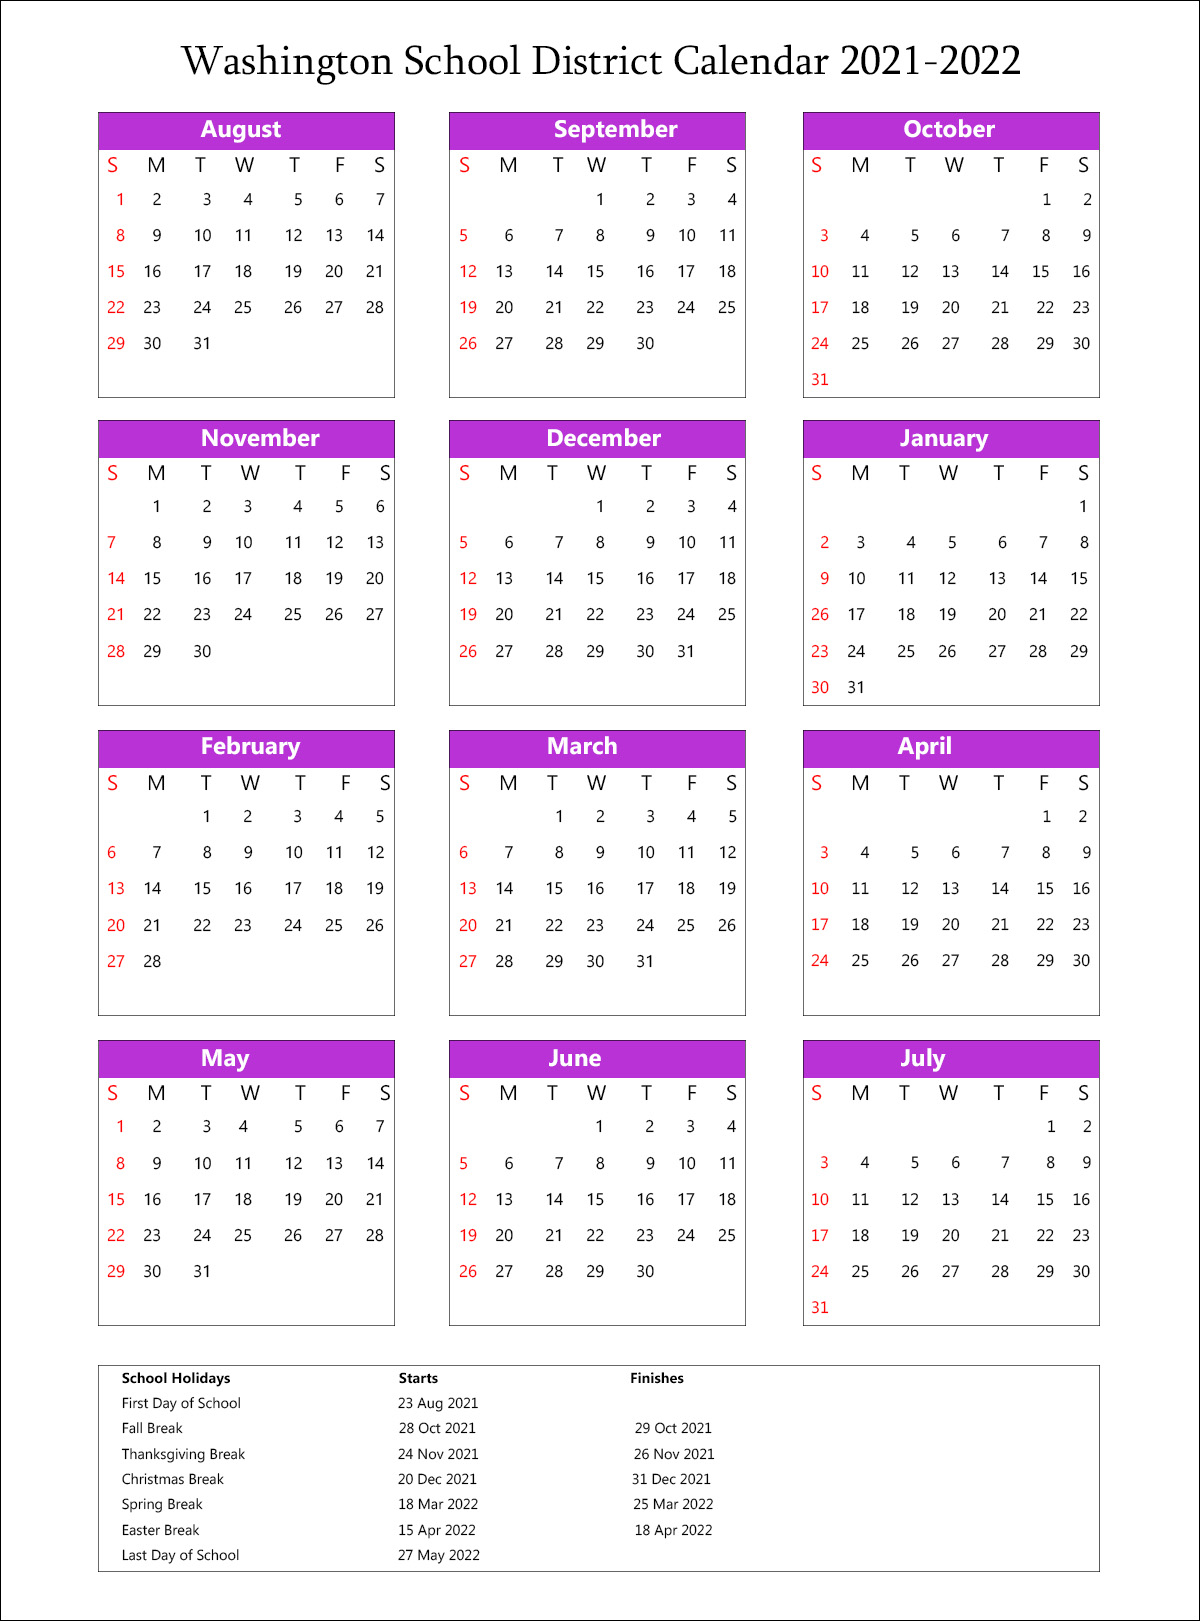 Washington School District, Pennsylvania Calendar Holidays 2021